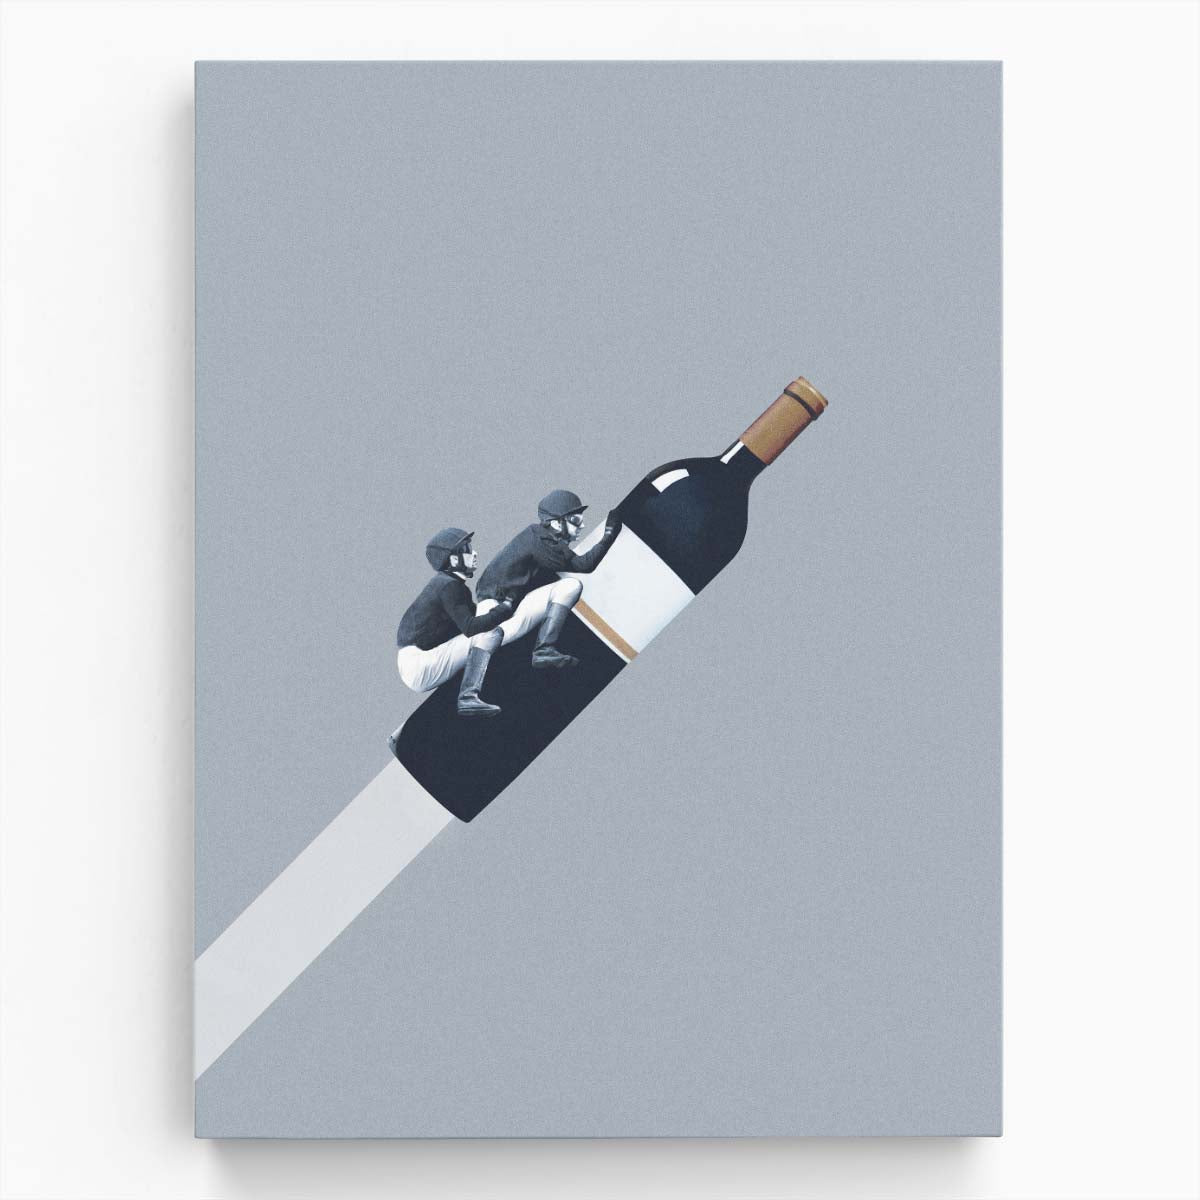 Mid-Century Wine Rocket Ride Illustration by Maarten Leon by Luxuriance Designs, made in USA